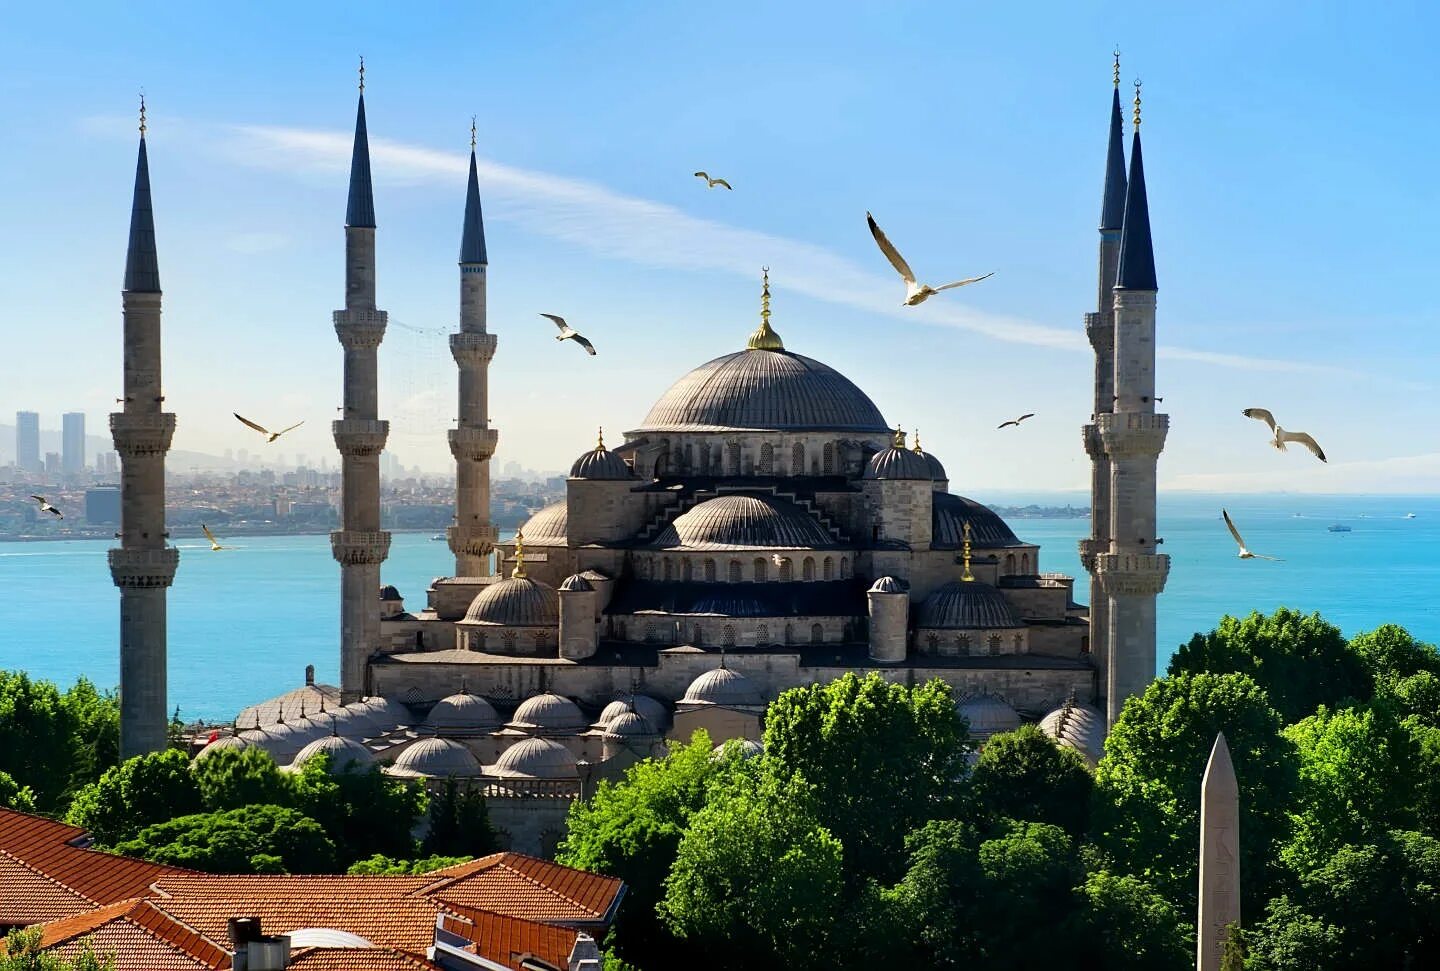 Travel турция. Голубая мечеть Турция. Турция Истанбул. Анкара голубая мечеть. Турция Анталия мечети.